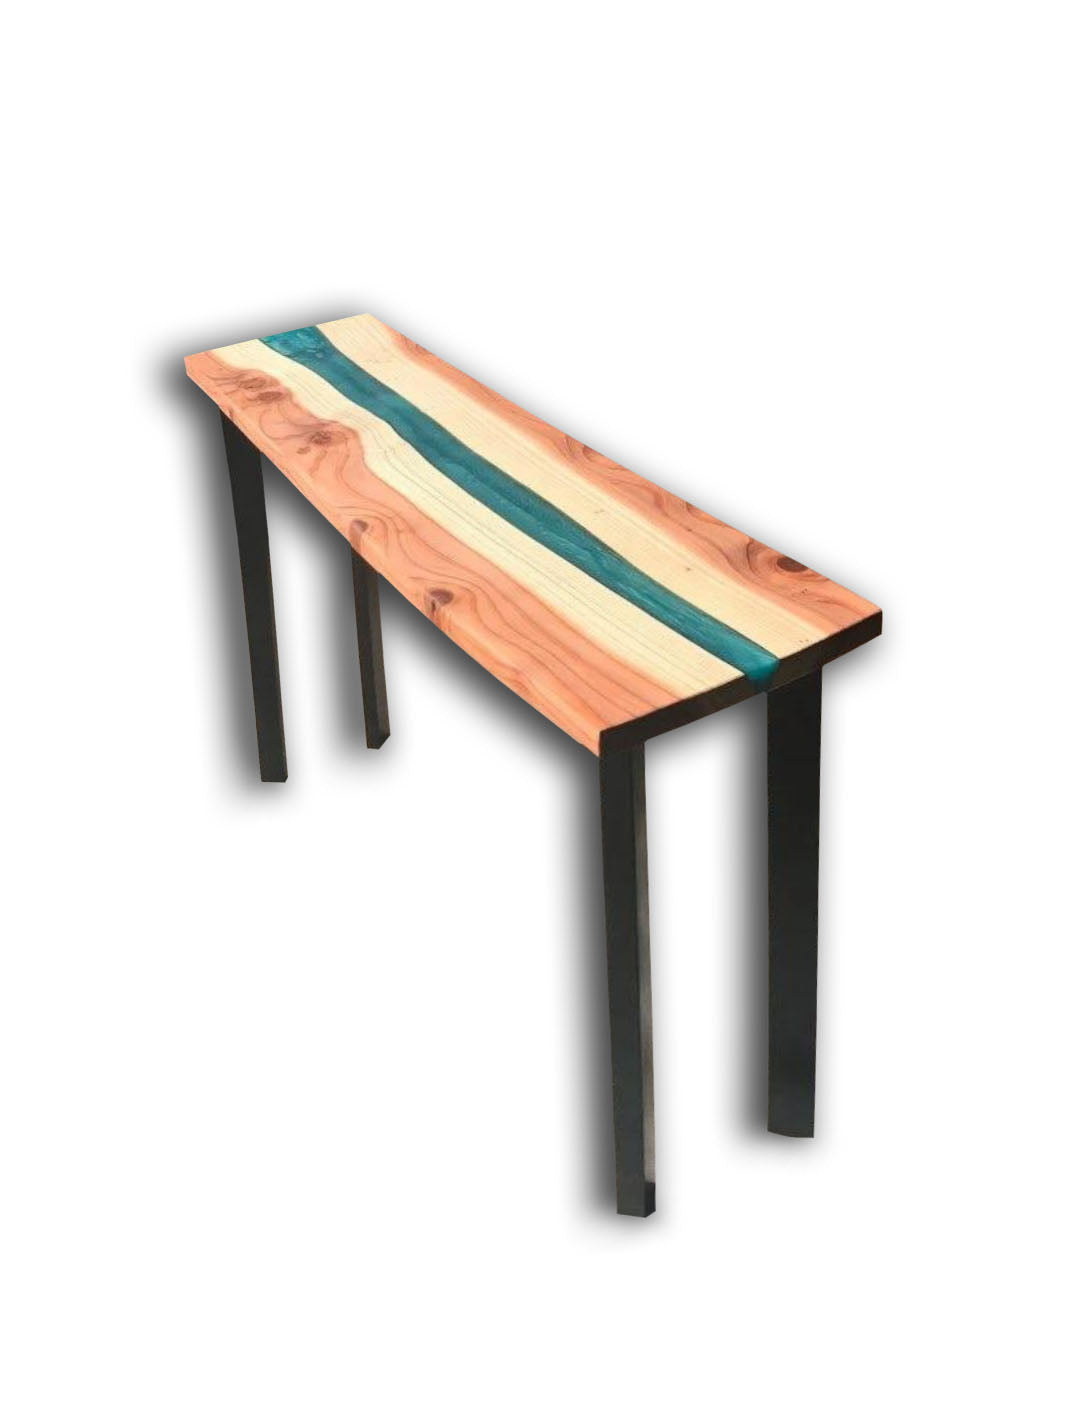 Custom Handmade Cedar Console Table with Epoxy River Design - Rustic Farmhouse Style for Entryway or Sofa DaddyO's Console Table sku_2305611ba1